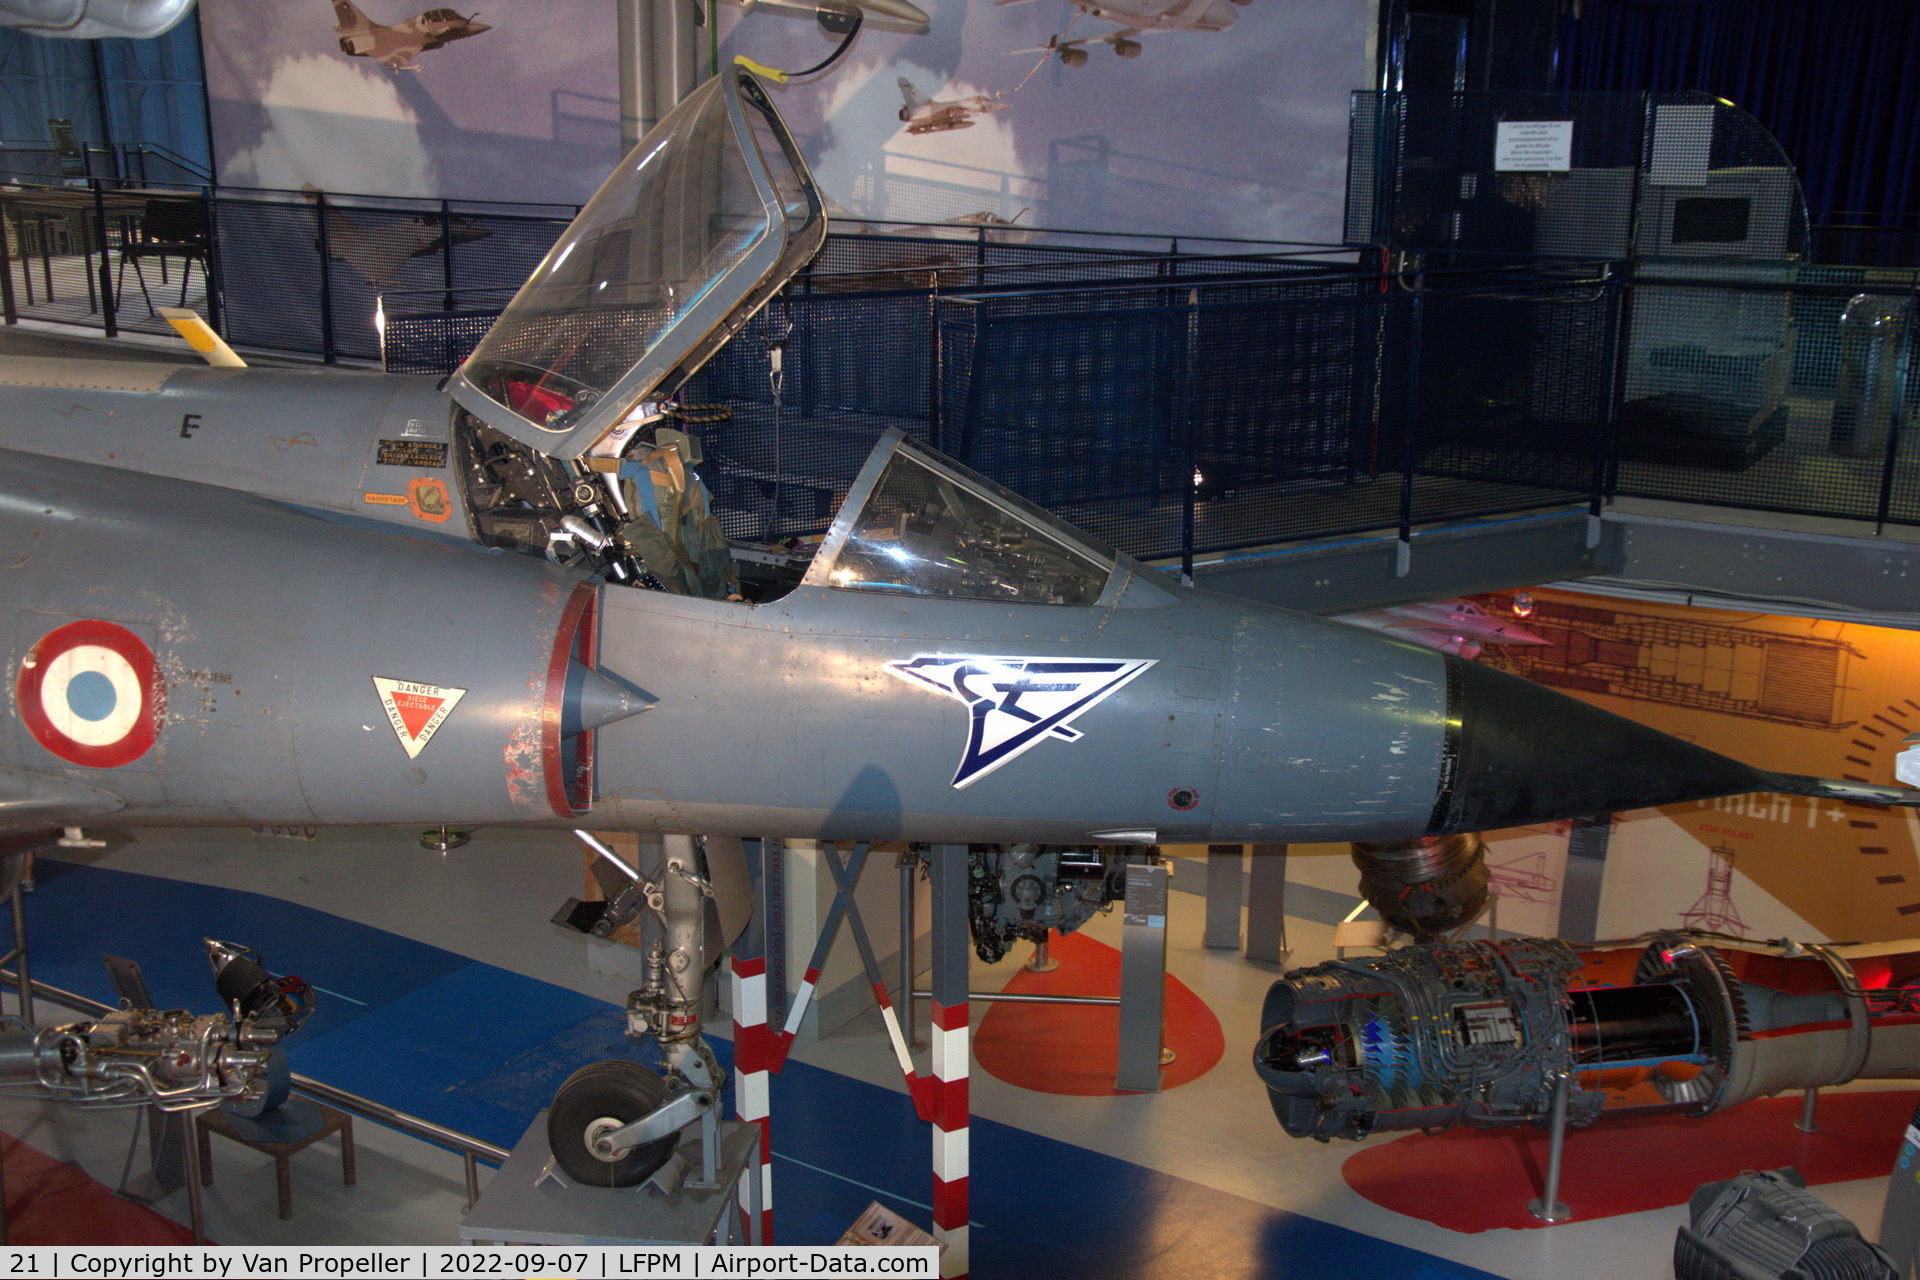 21, Dassault Mirage IIIC C/N 21, Dassault Mirage IIIC in the safran museum at Melun Villaroche airport, France